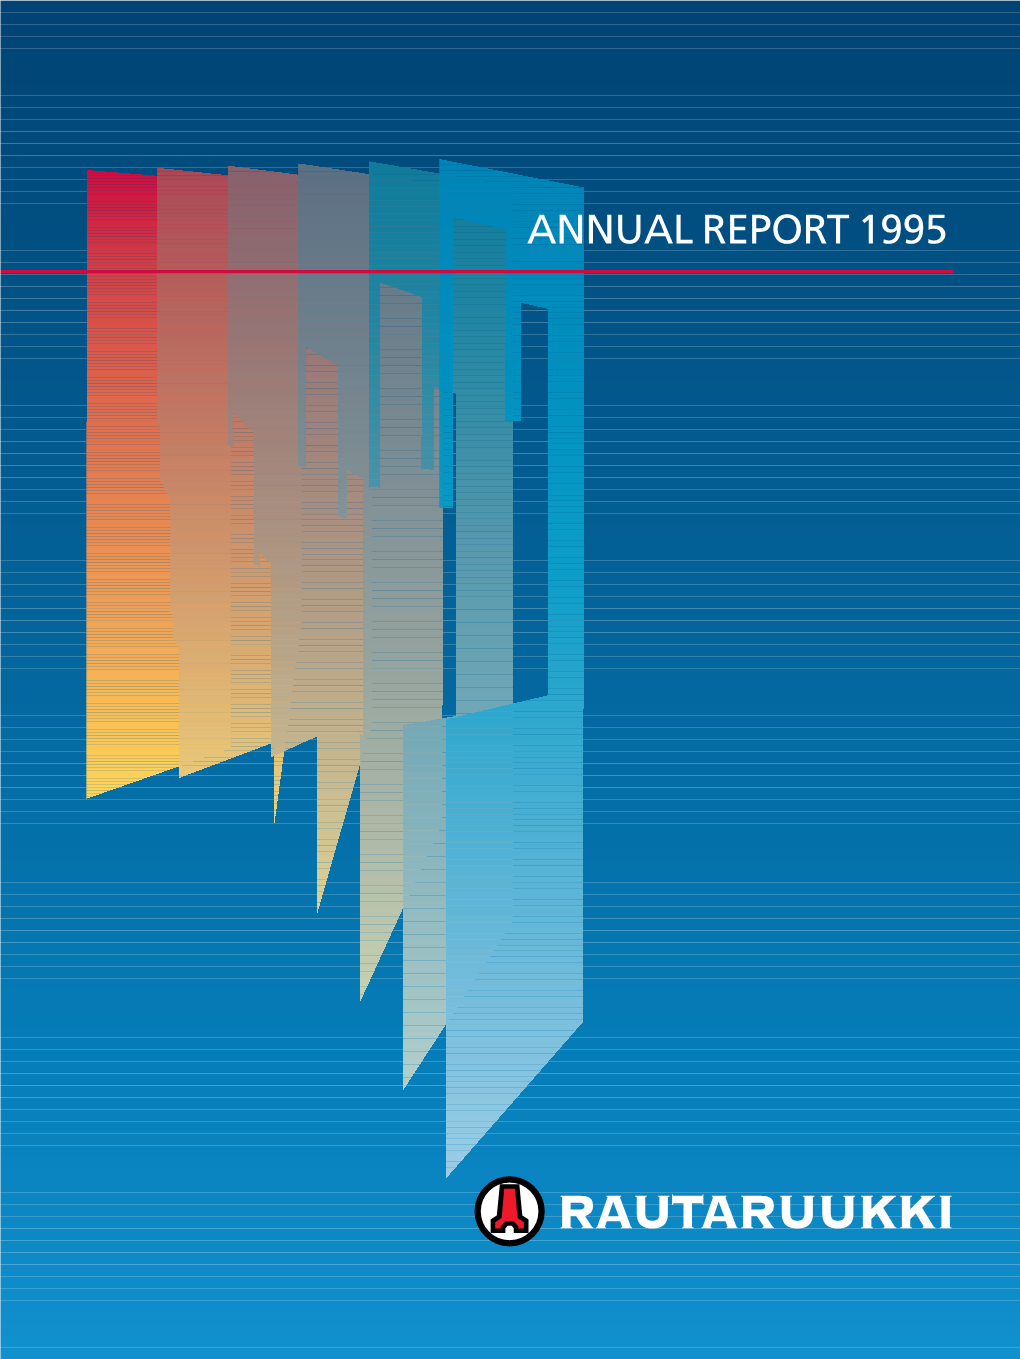 Rautaruukki Annual Report